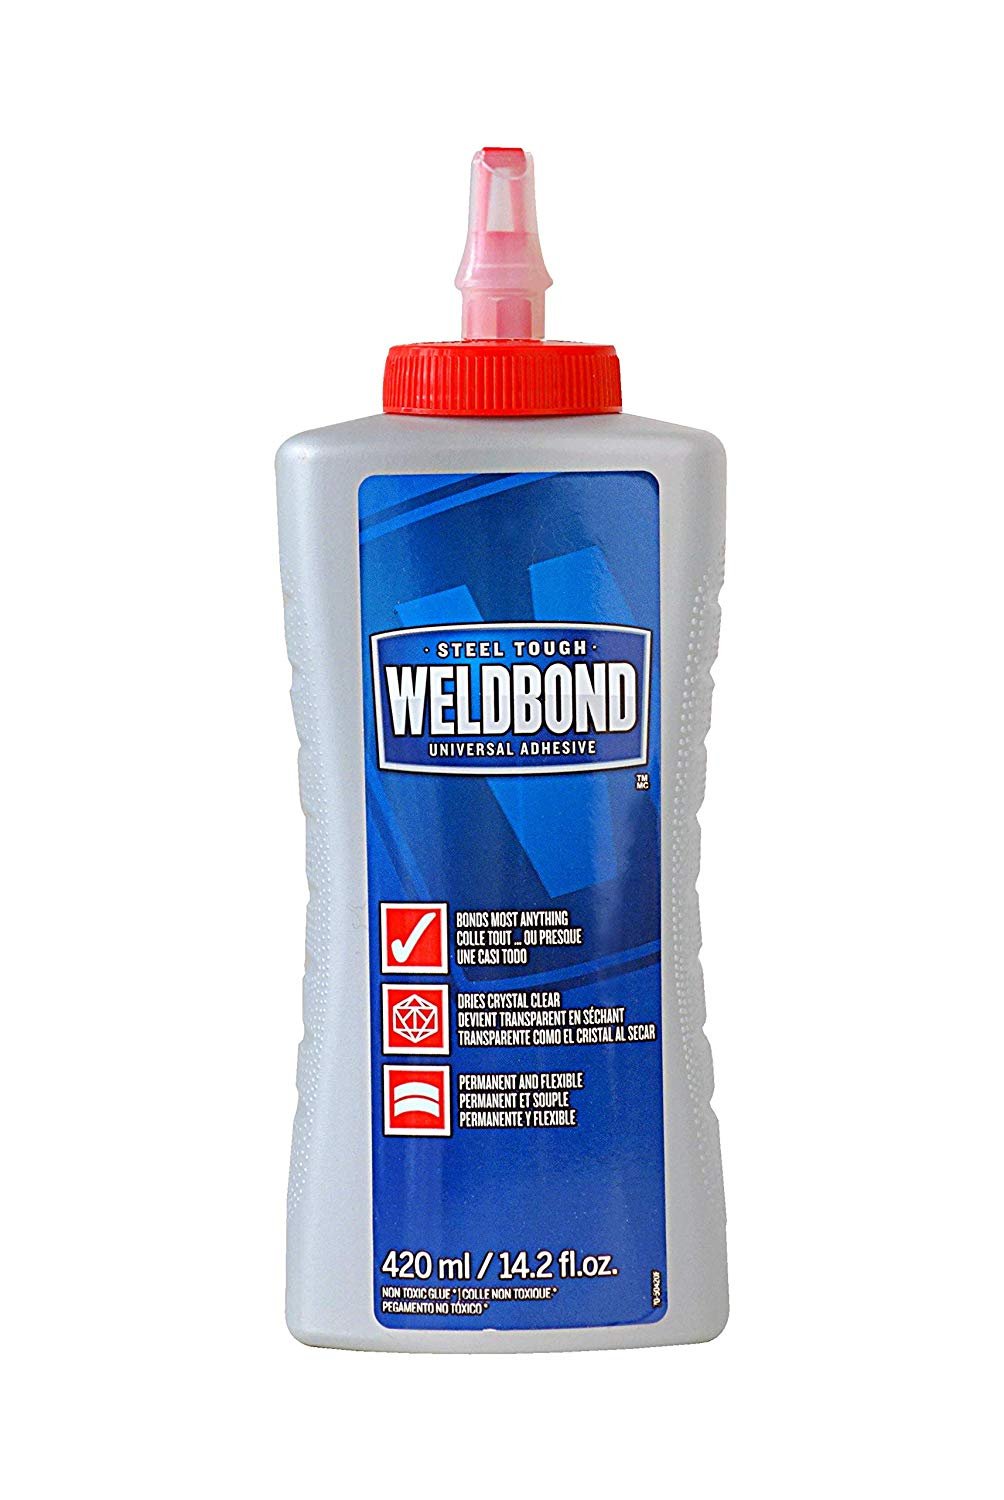 Weldbond 8-50420 Multi-Purpose Adhesive Glue, 1-Pack, As Pictured